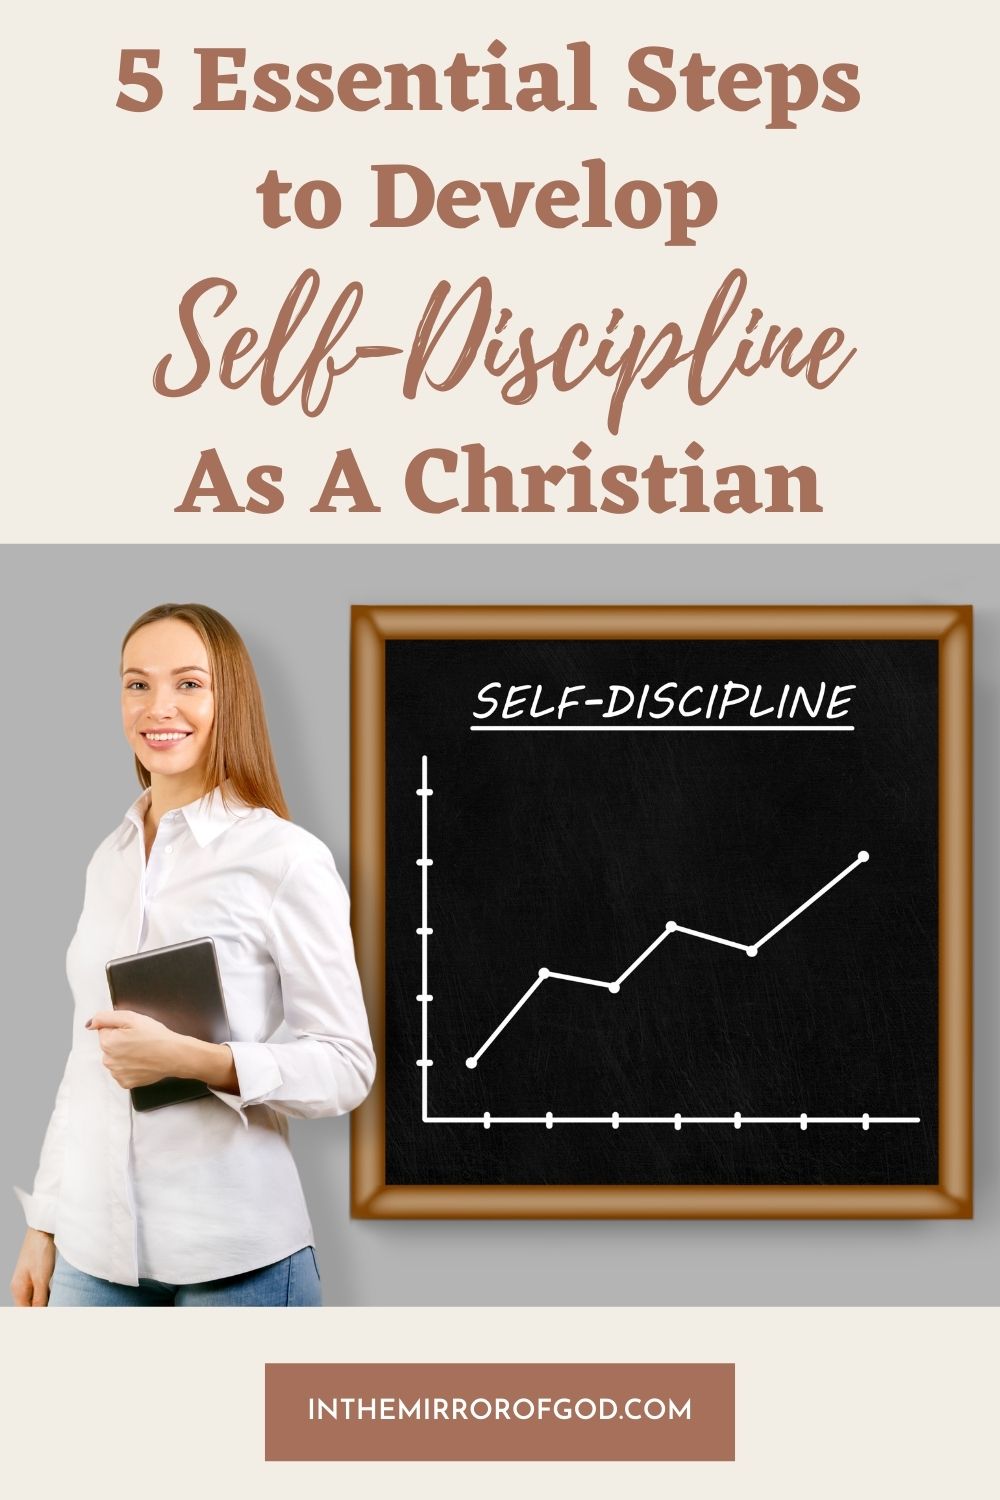 5 Essential Steps to Develop Self-Discipline as a Christian